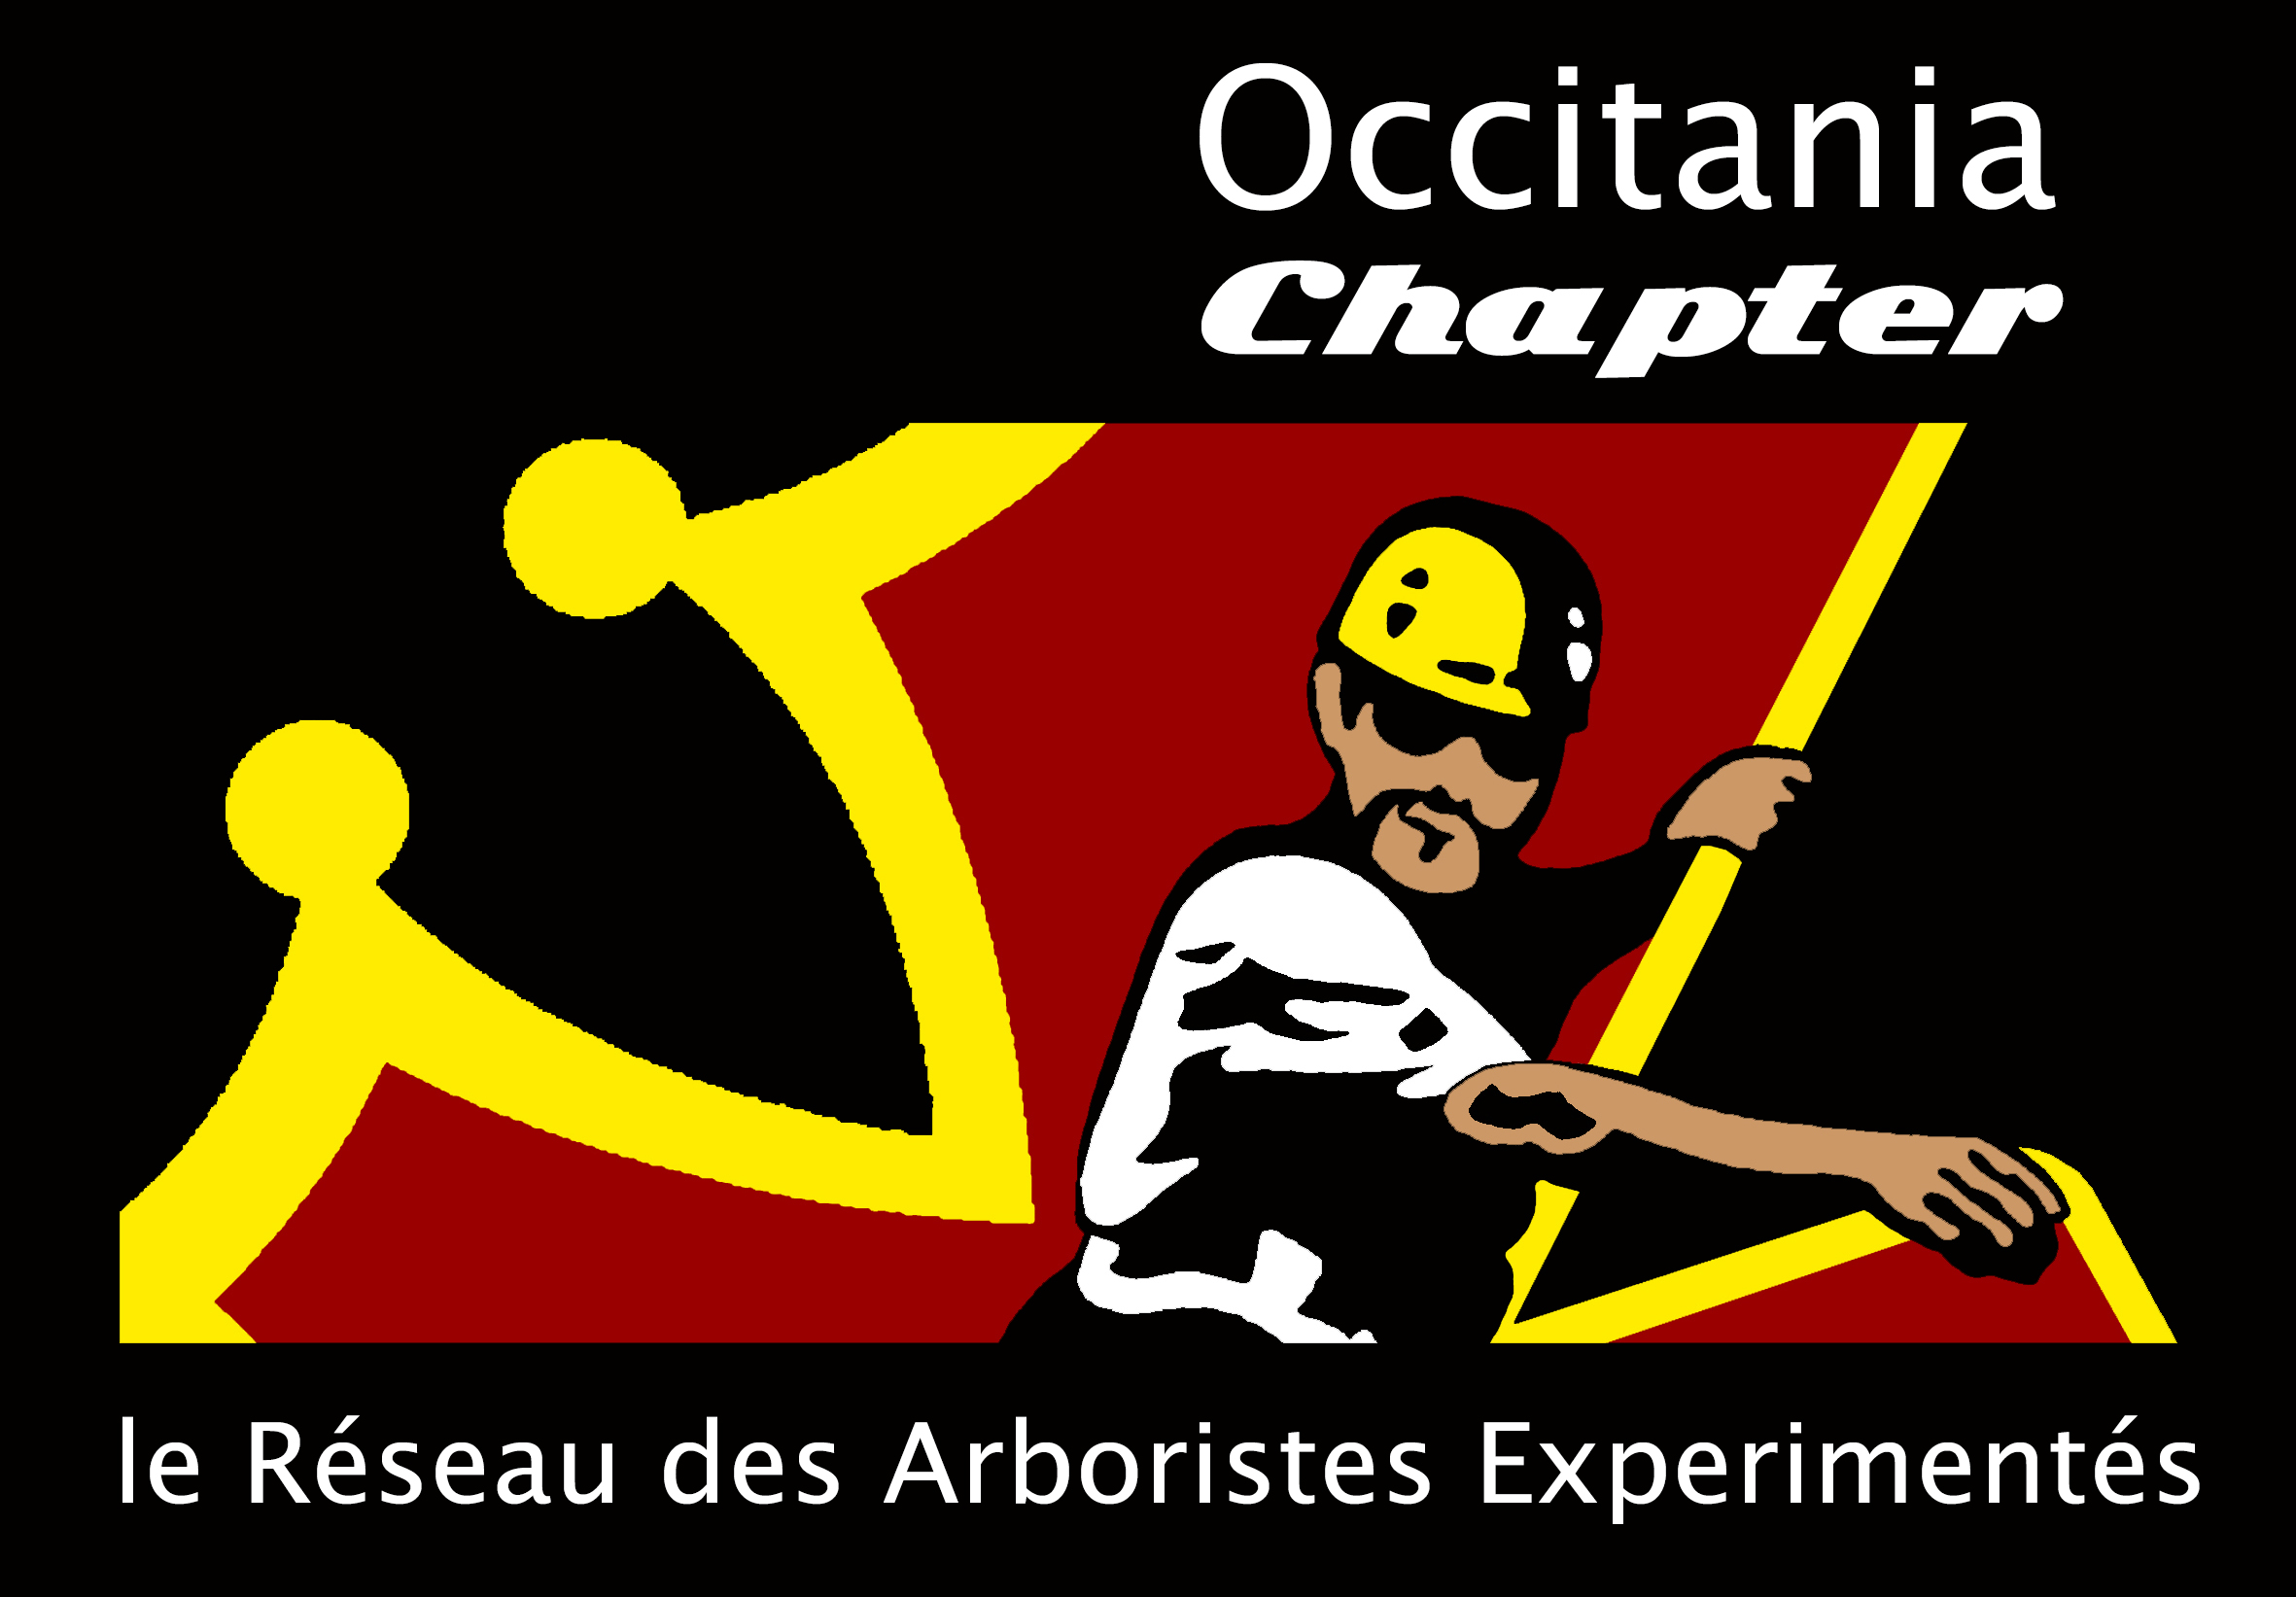 occitania chapter